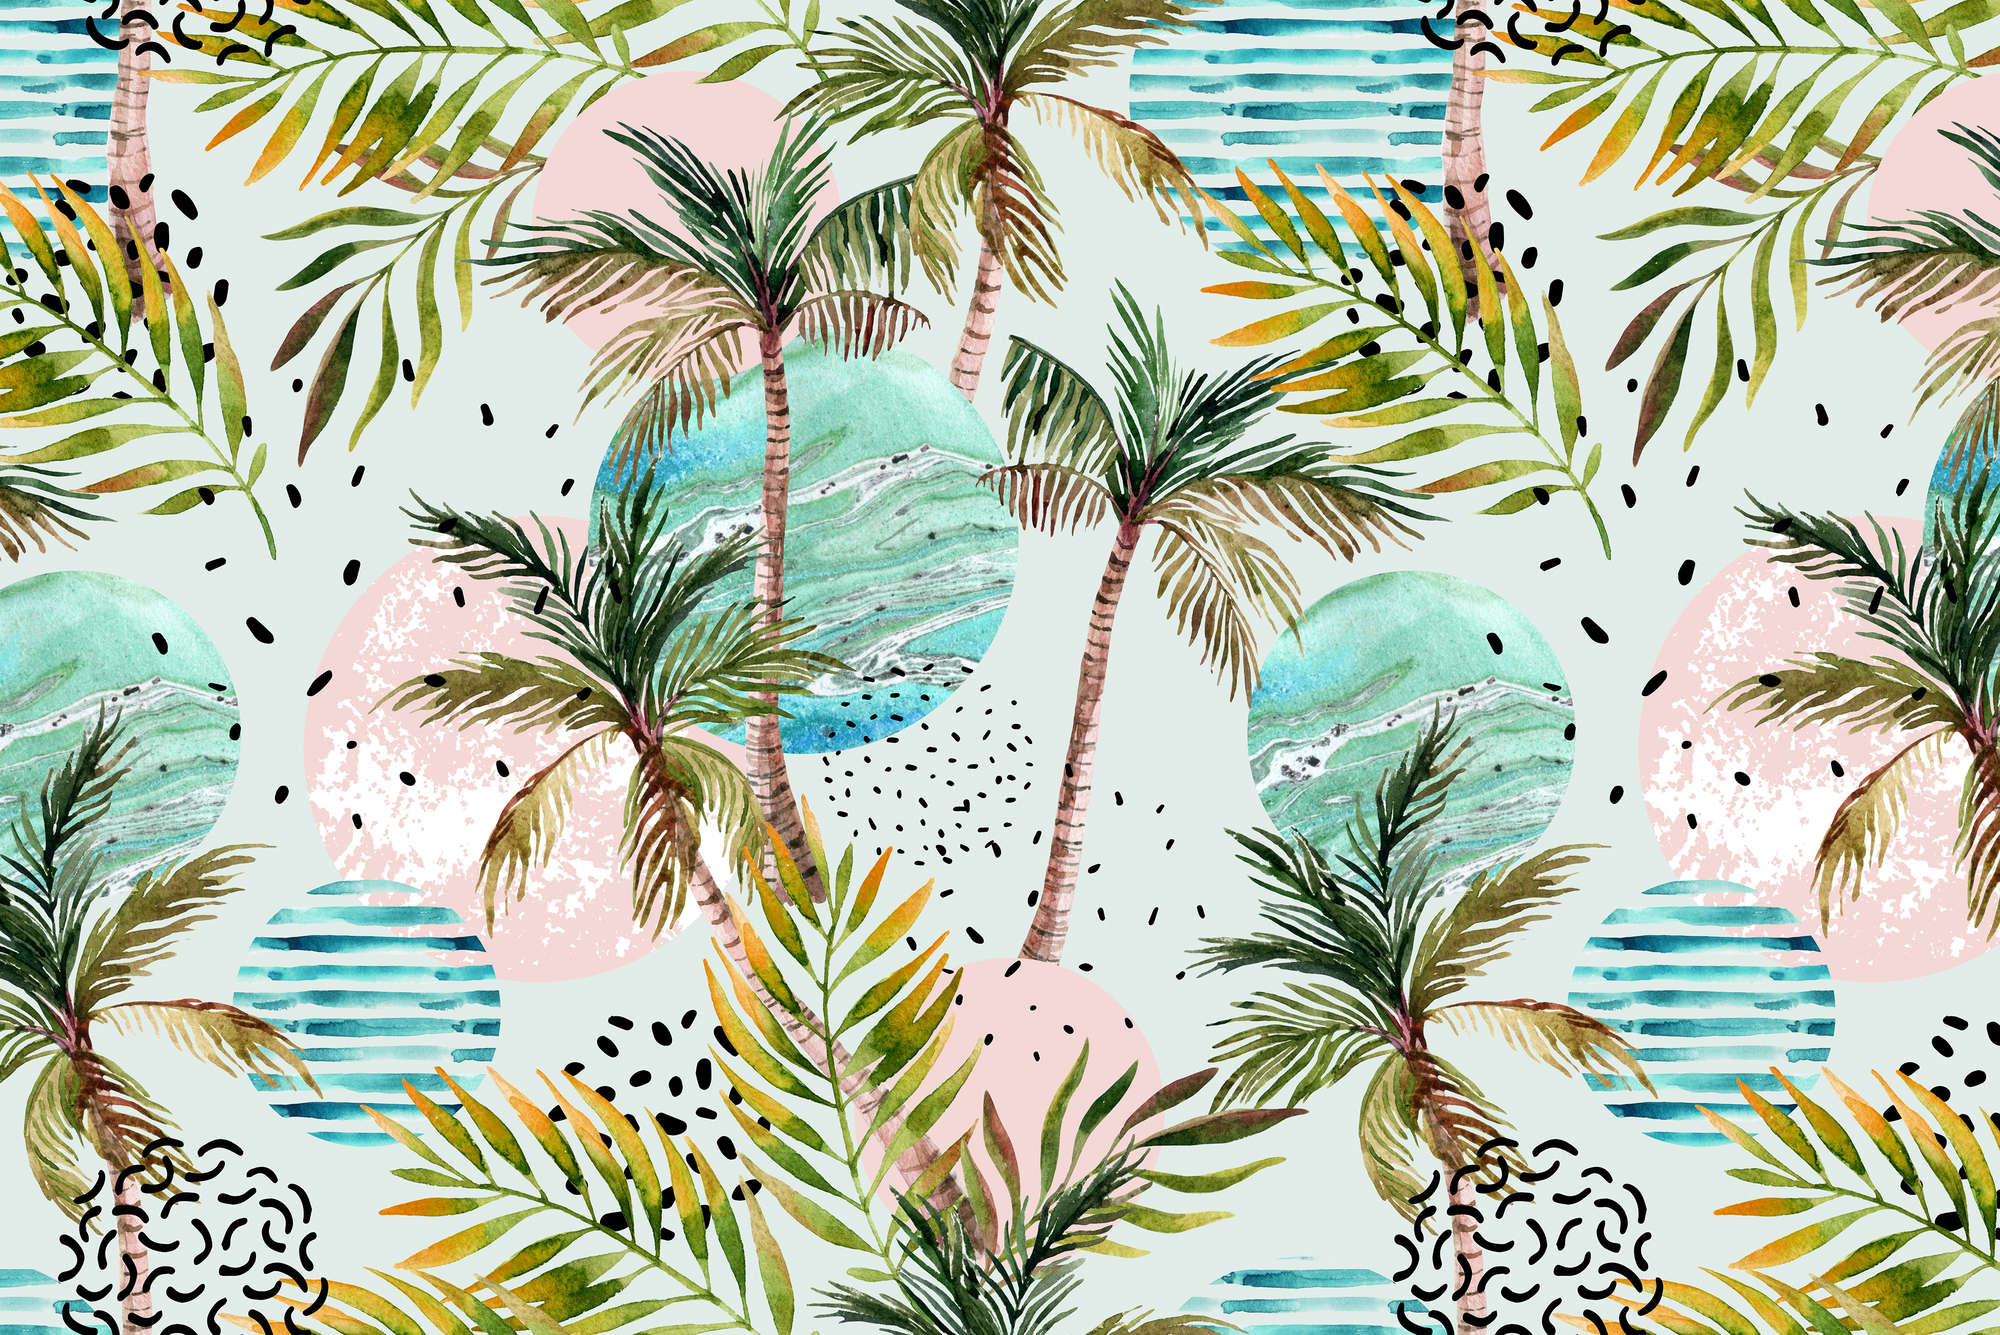             Mural gráfico de palmeras con símbolos de olas sobre vellón texturizado
        